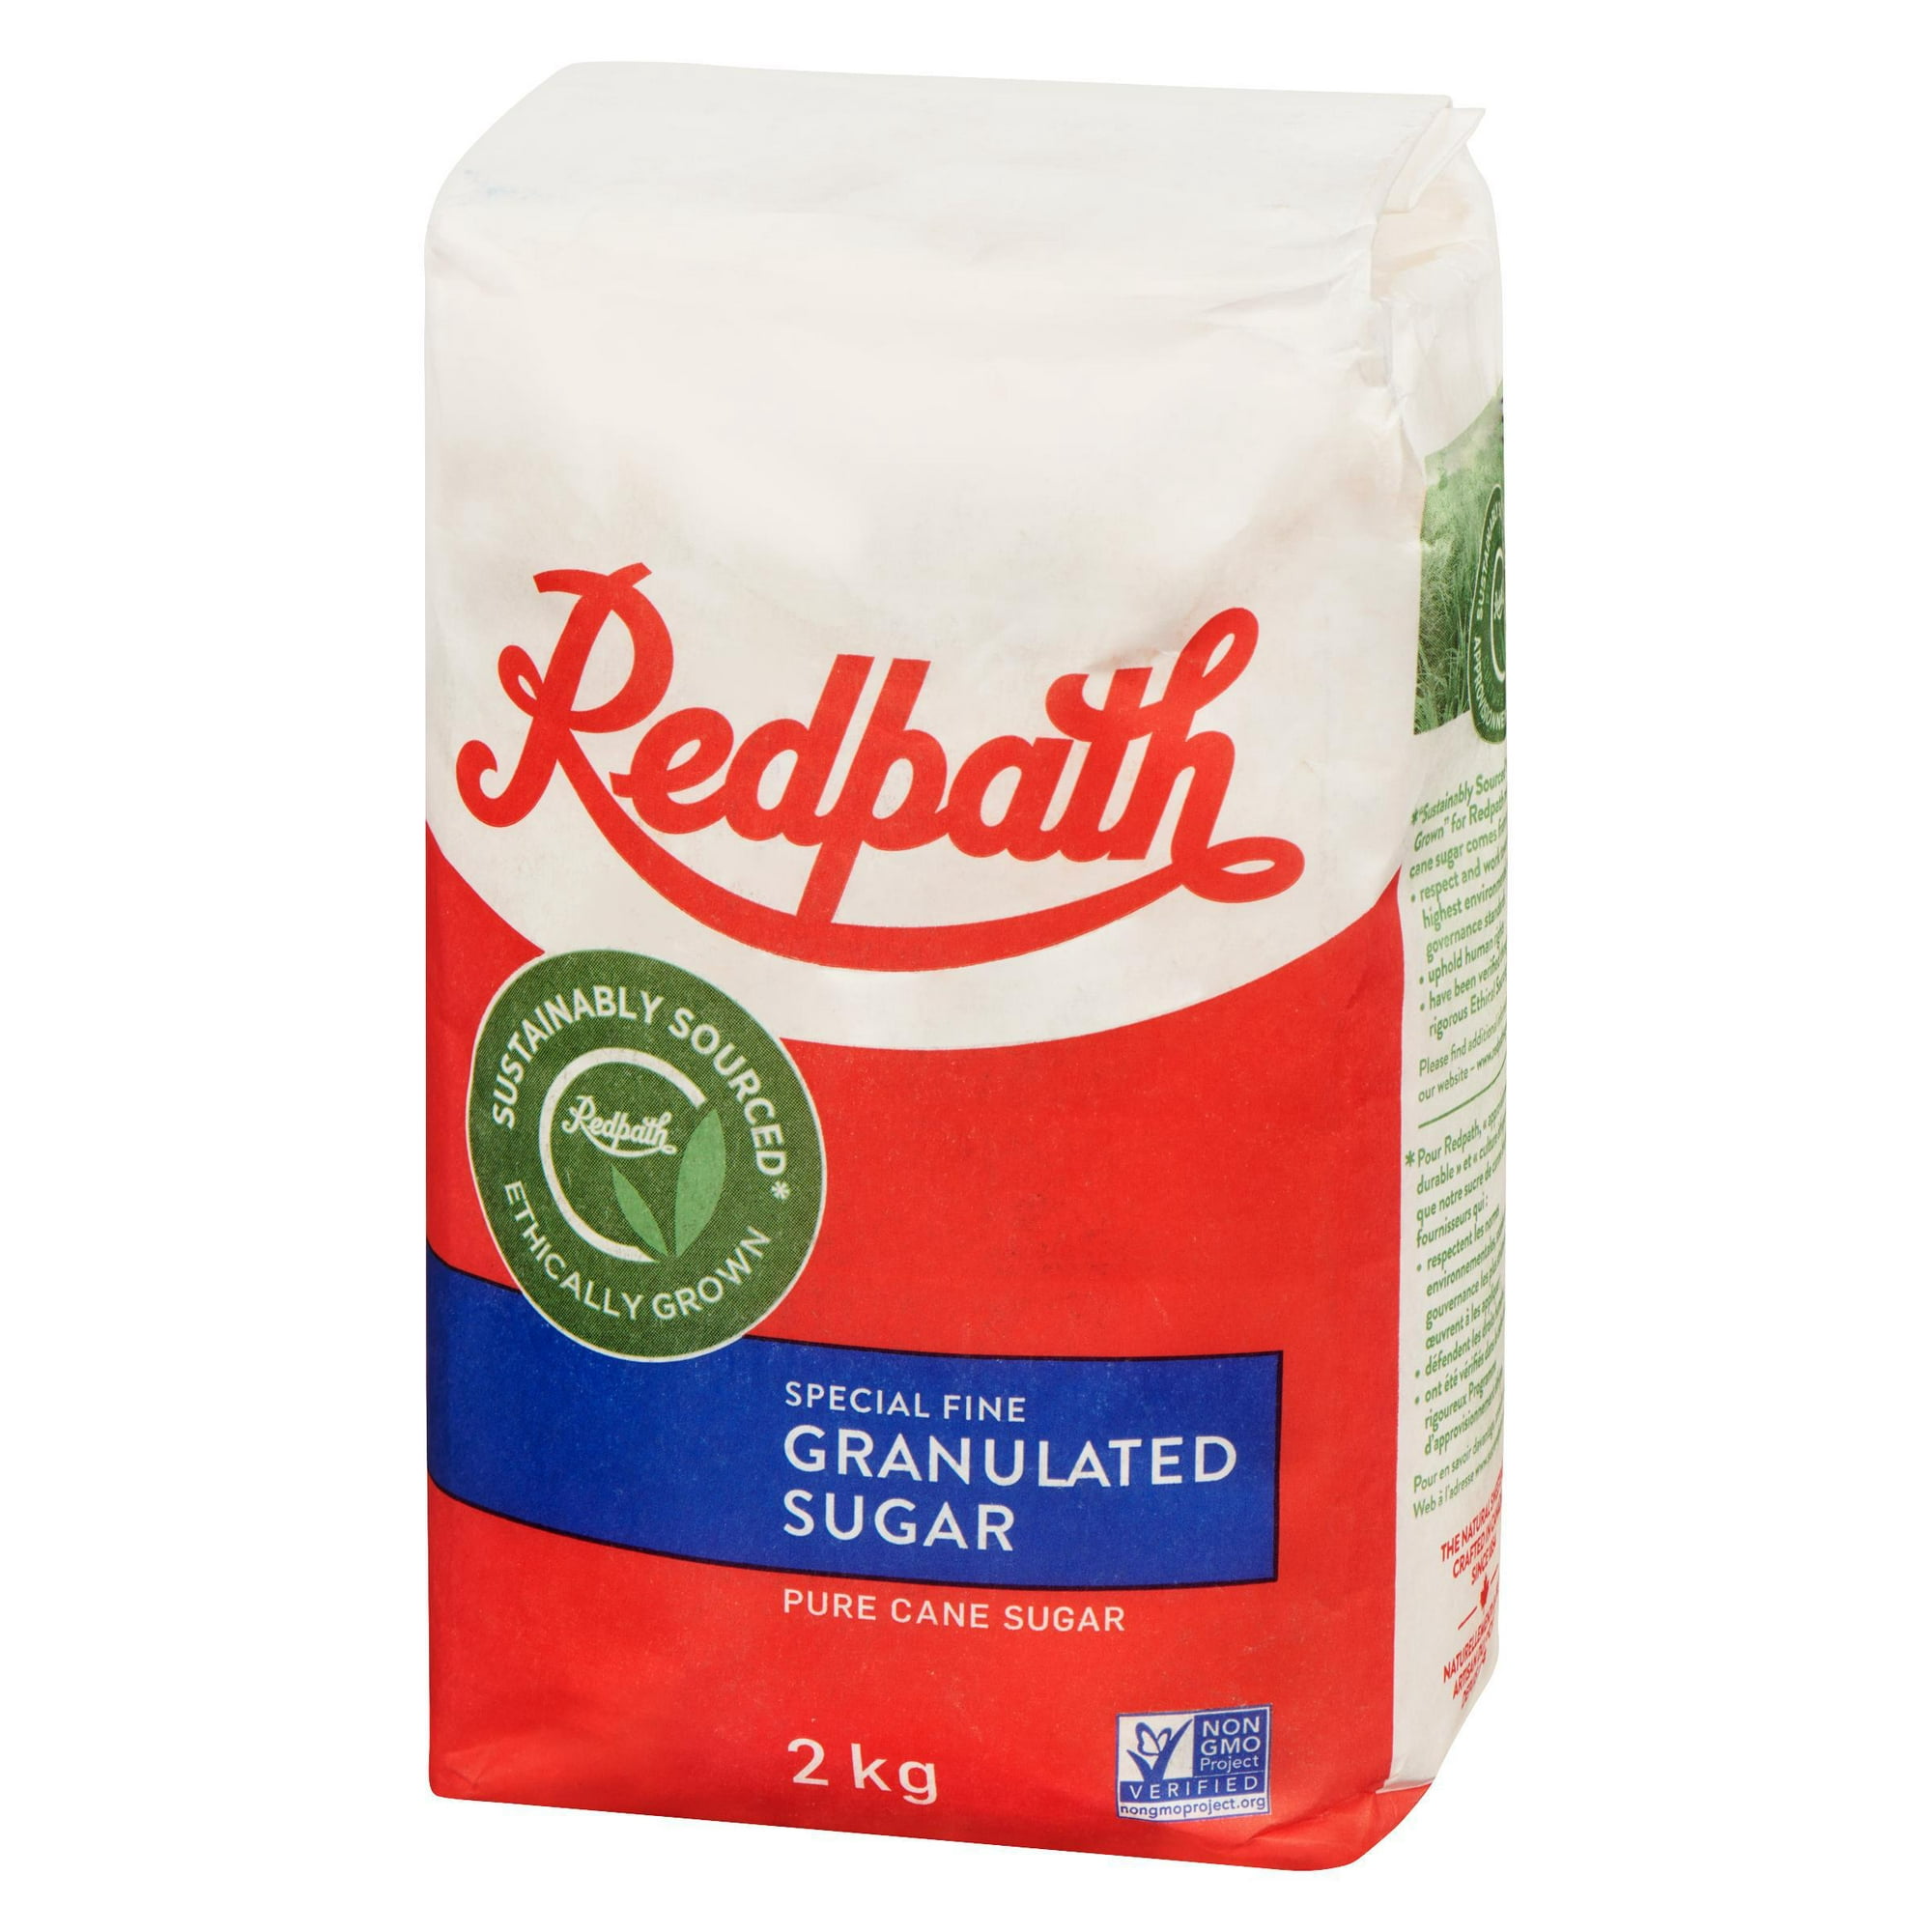 Blur curriculum Flashy Redpath Special Fine Granulated Sugar | Walmart Canada